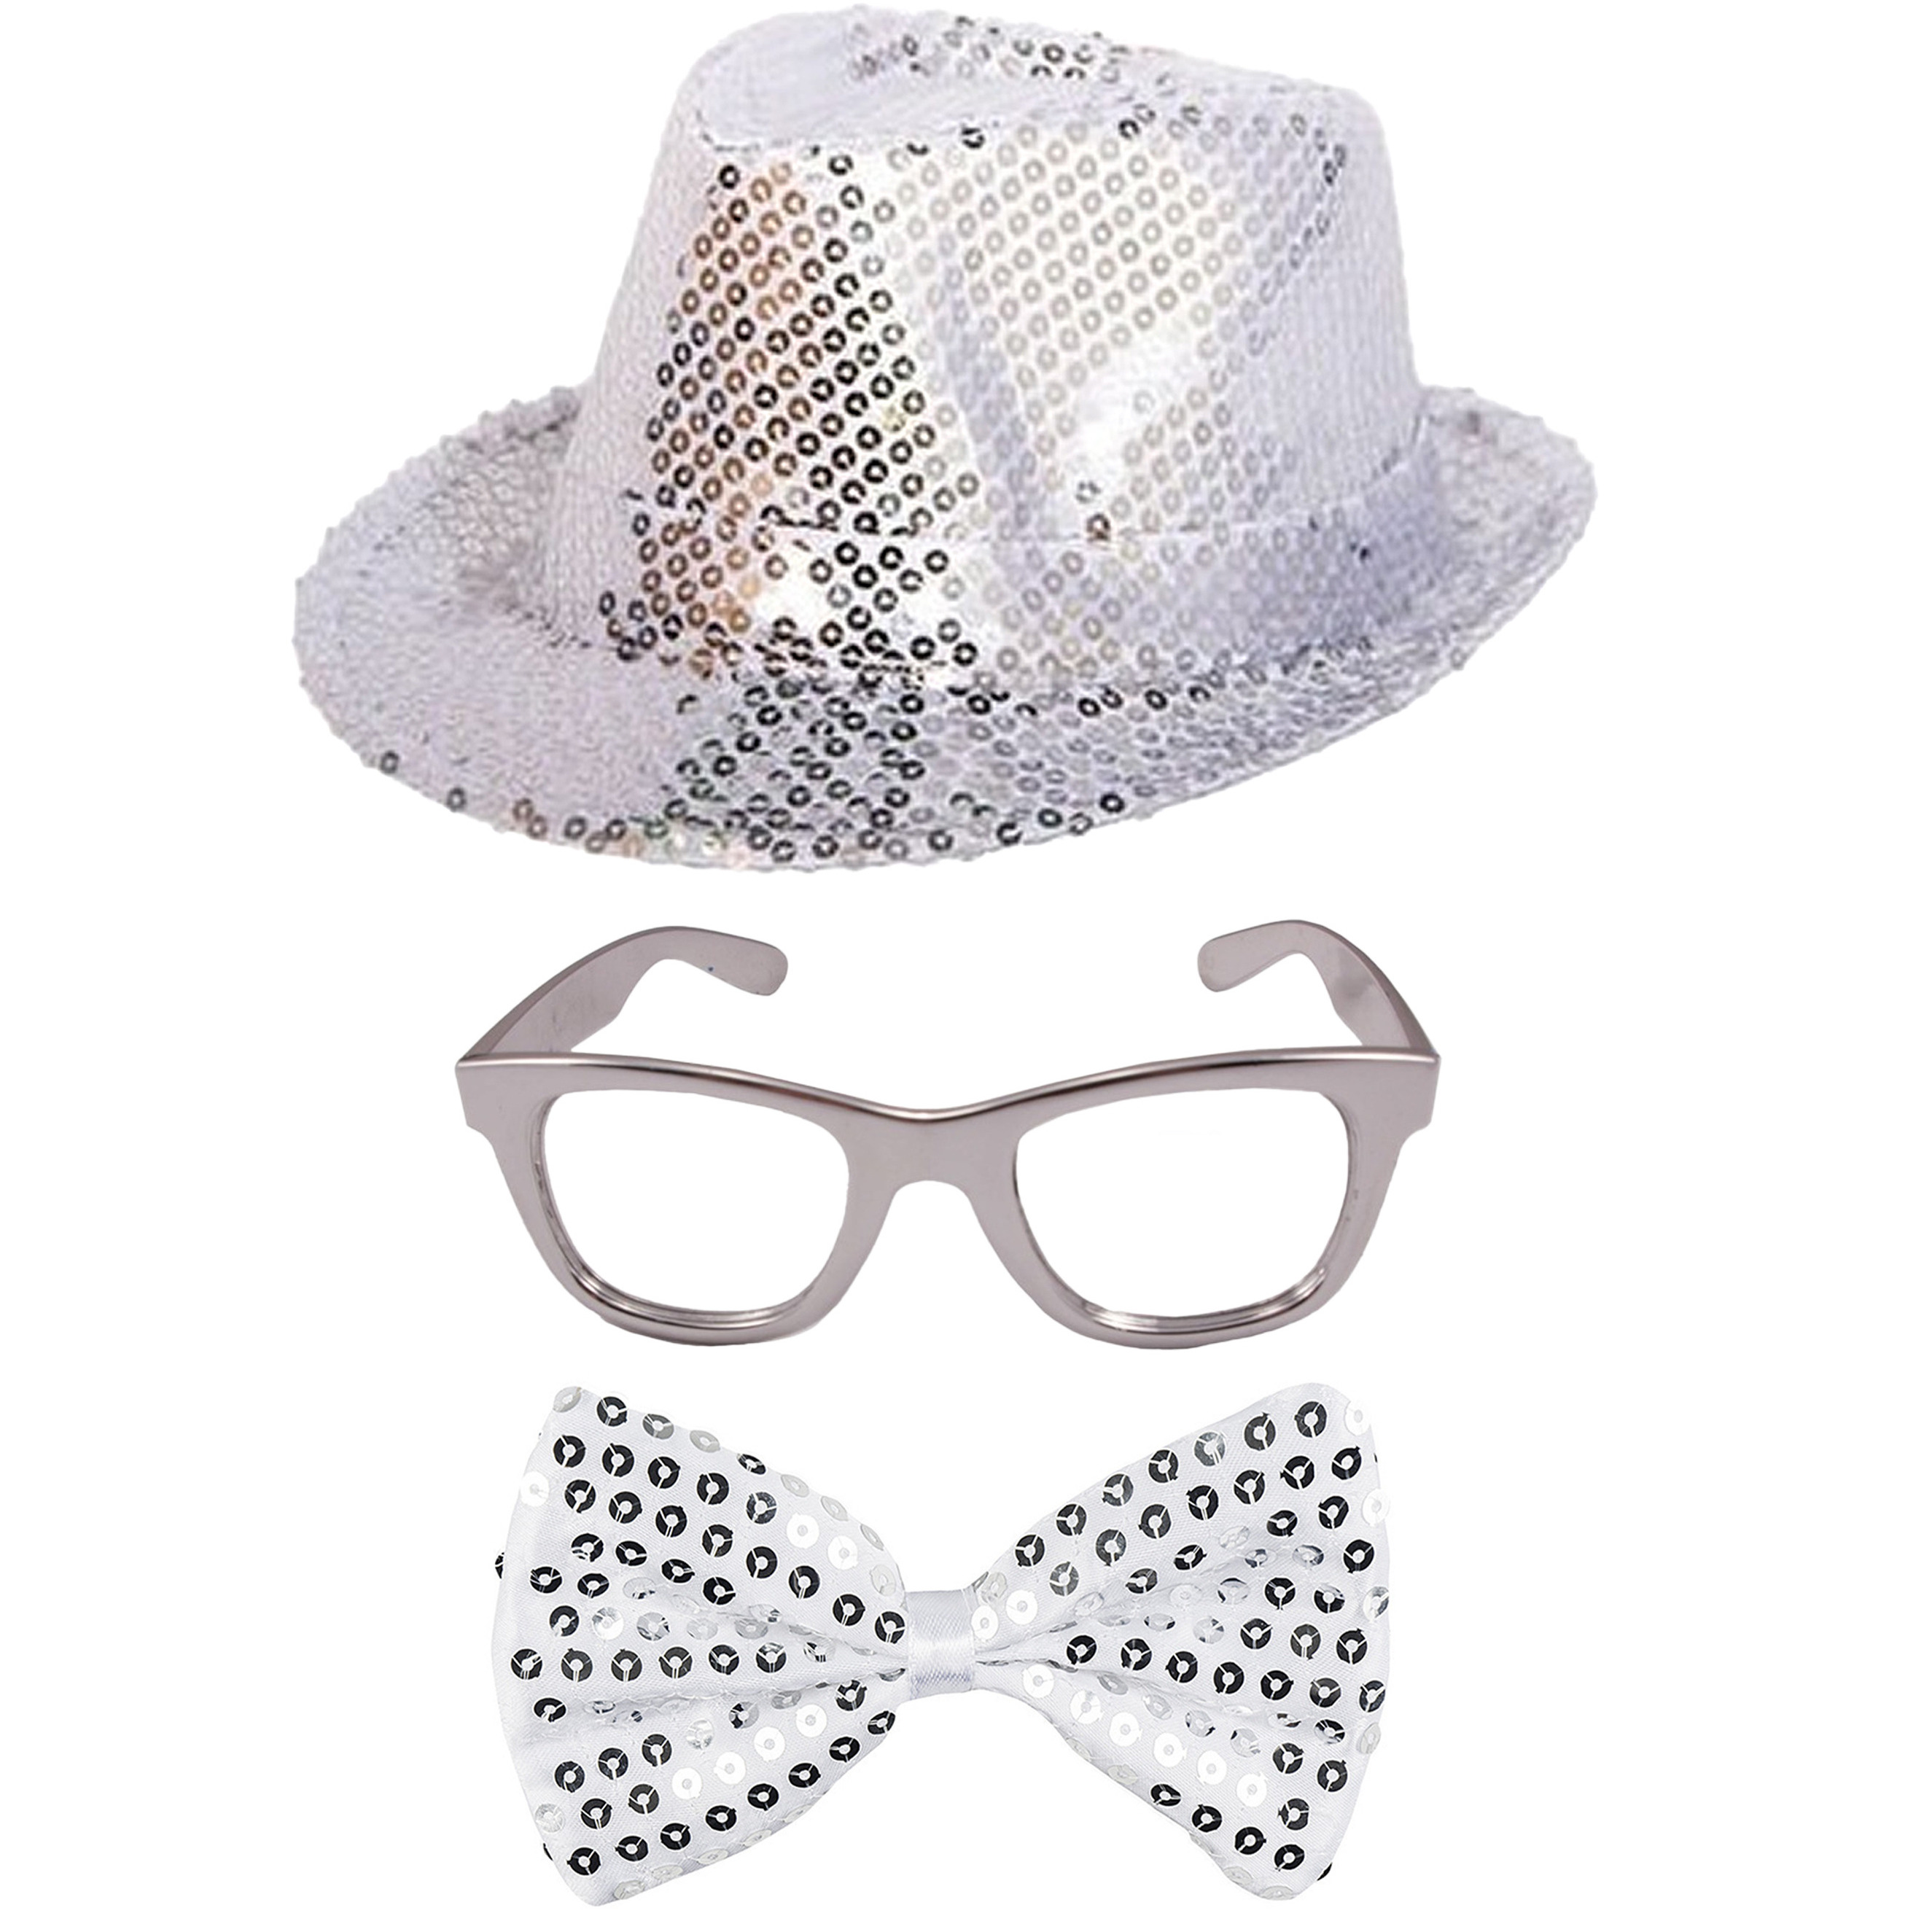 Toppers Carnaval verkleed set hoed-strikje-bril zilver glitters